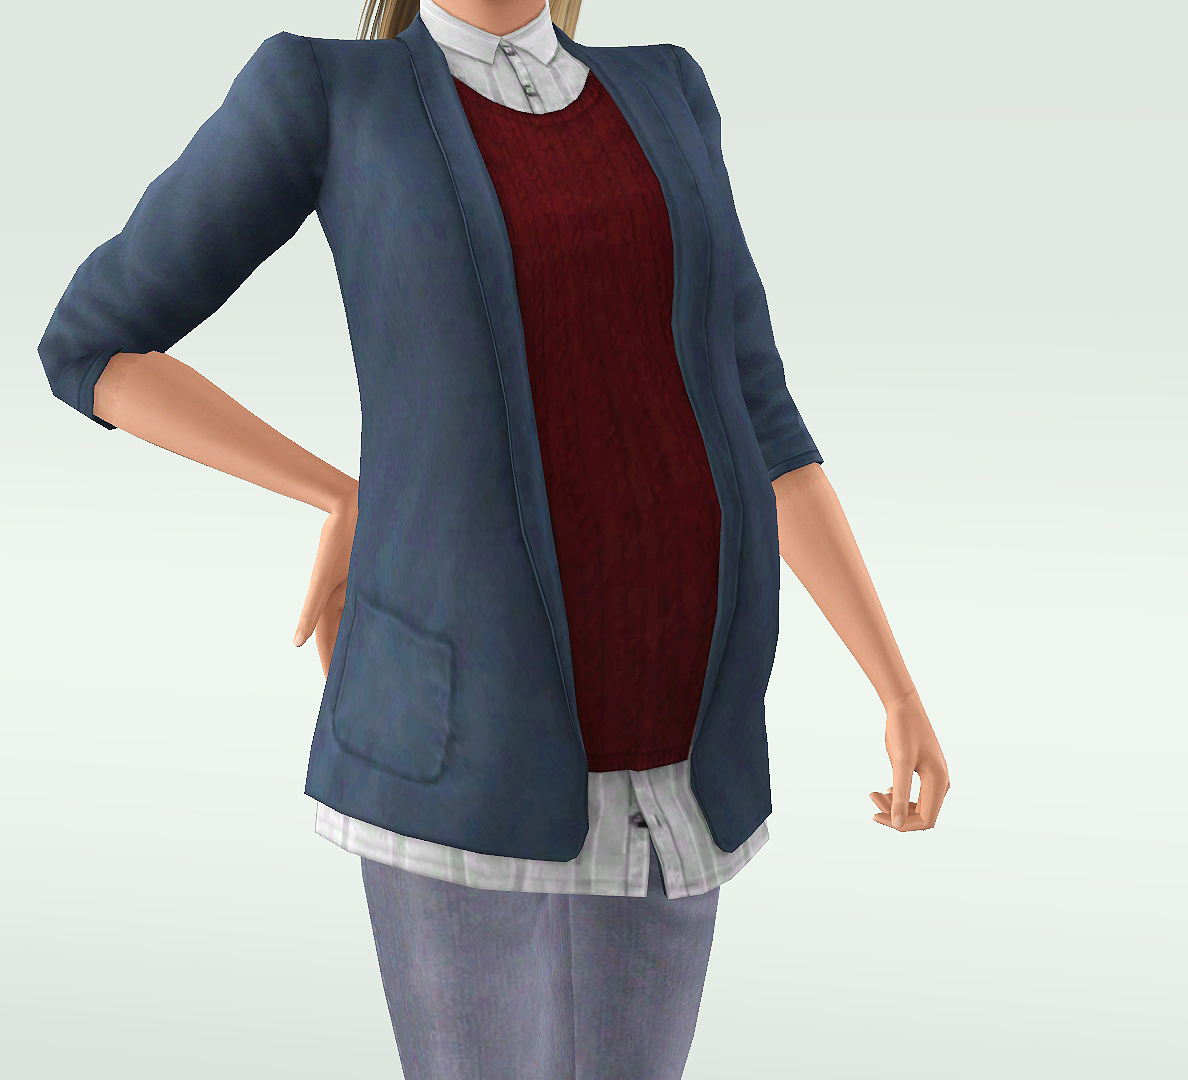 The sims 3: Одежда для будущих мам - Страница 3 Screenshot-231b